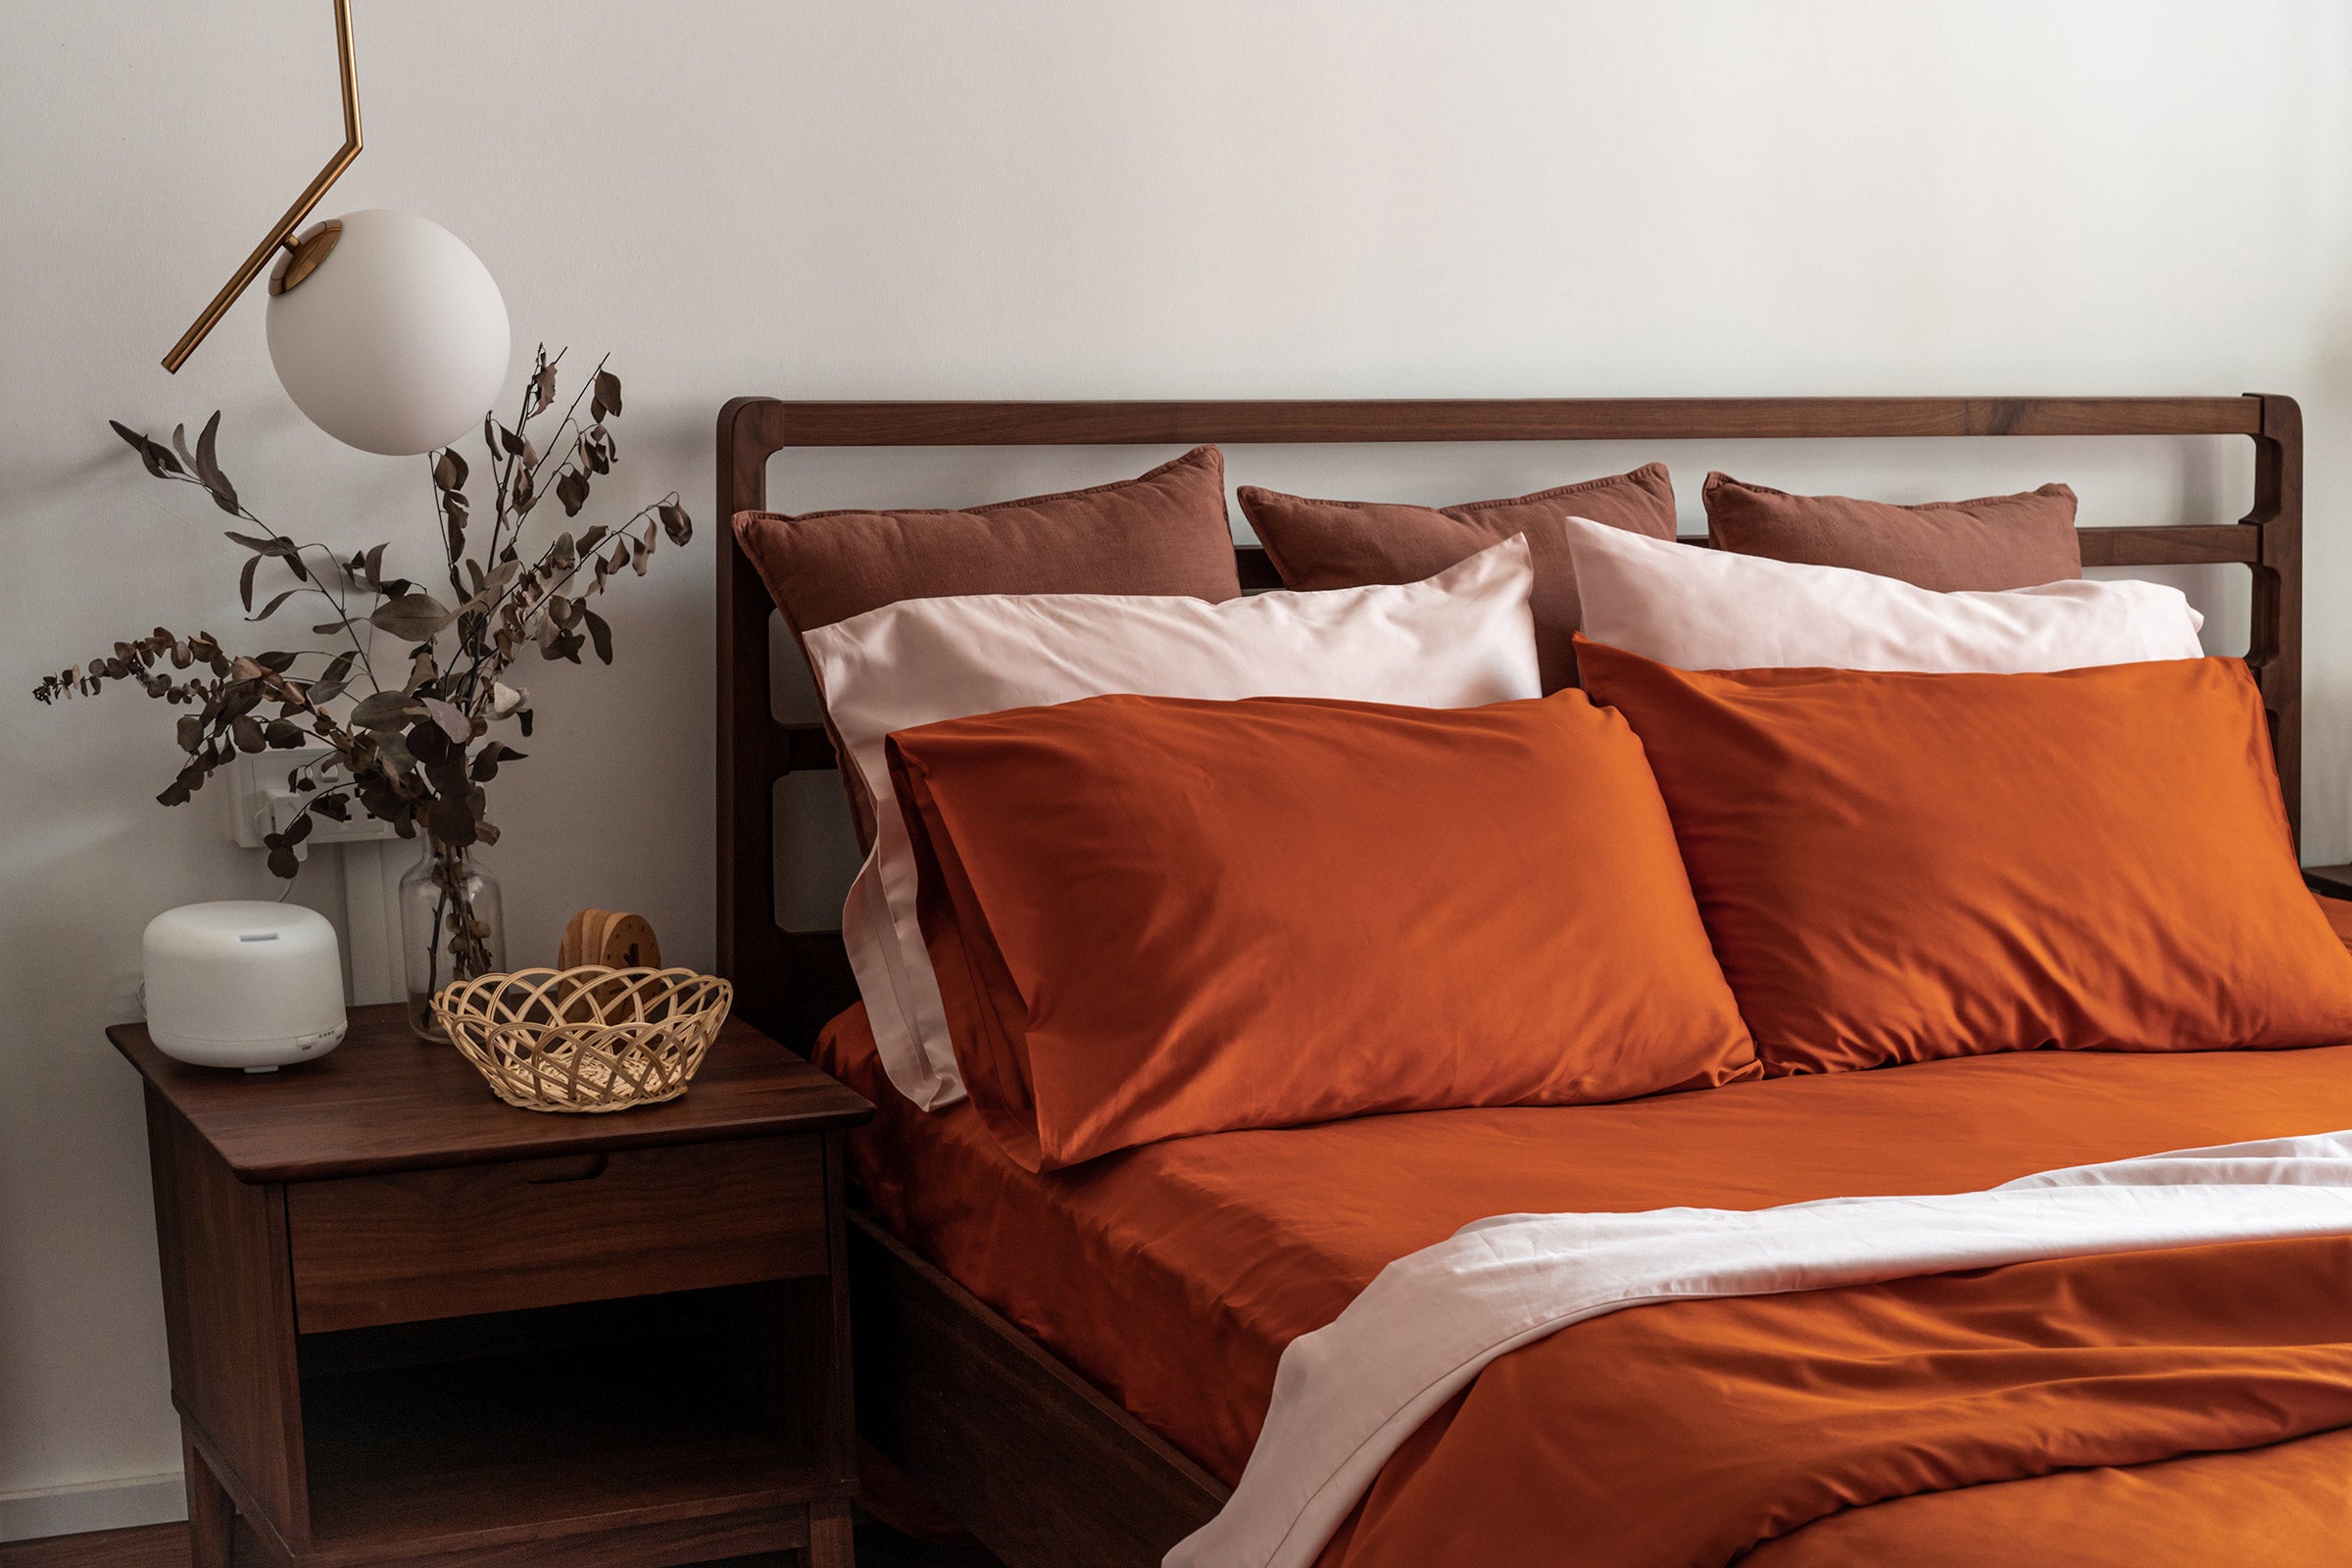 classic-autumn-fitted-sheet-duvet-cover-pillowcase-pair-natural-pillowcase-pair-flat-sheet-by-sojao.jpg